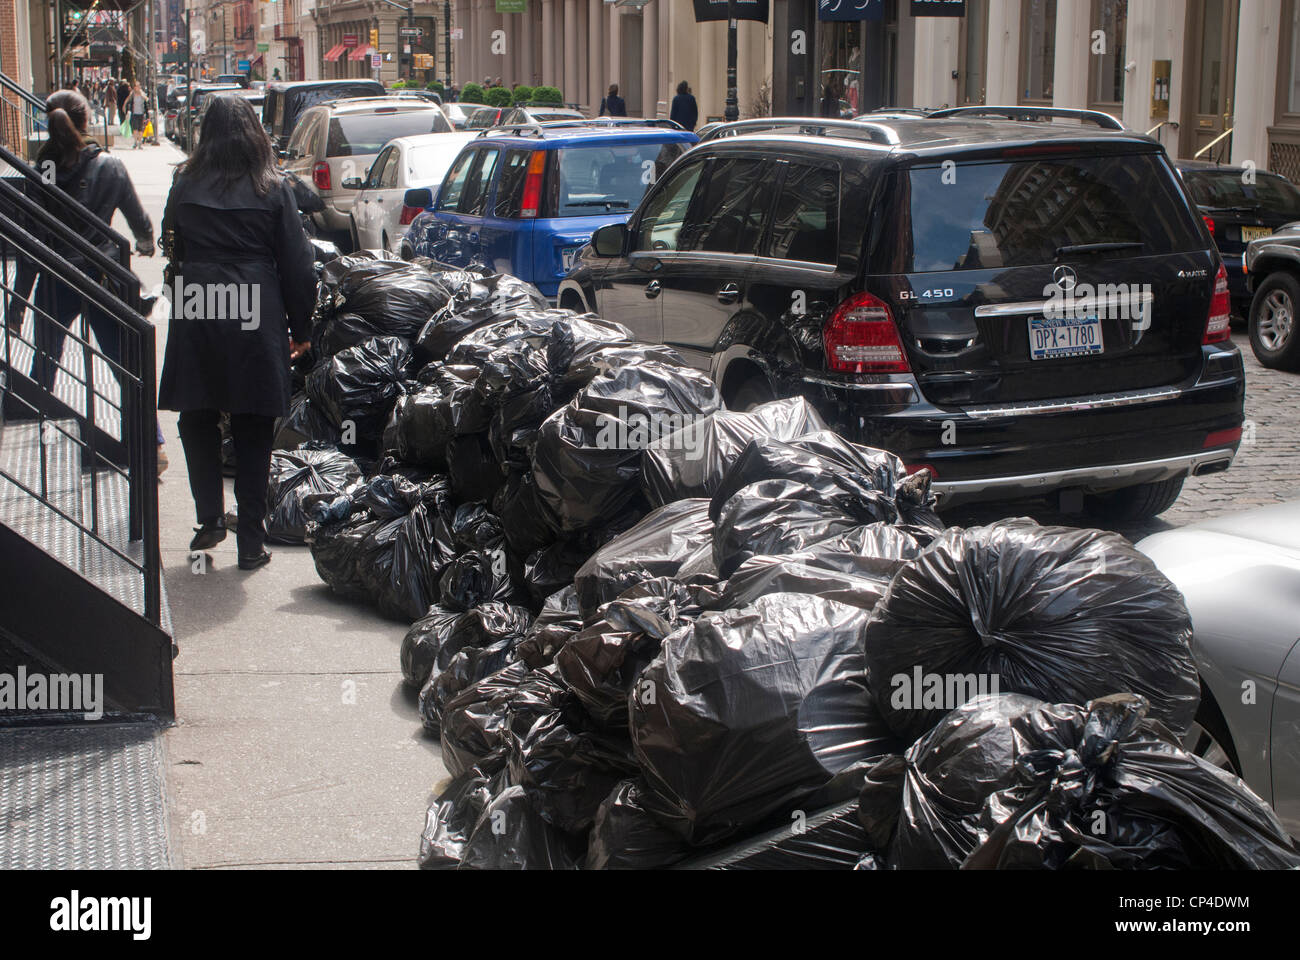 https://c8.alamy.com/comp/CP4DWM/piles-of-trash-in-plastic-bags-await-pick-up-curbside-in-new-york-CP4DWM.jpg